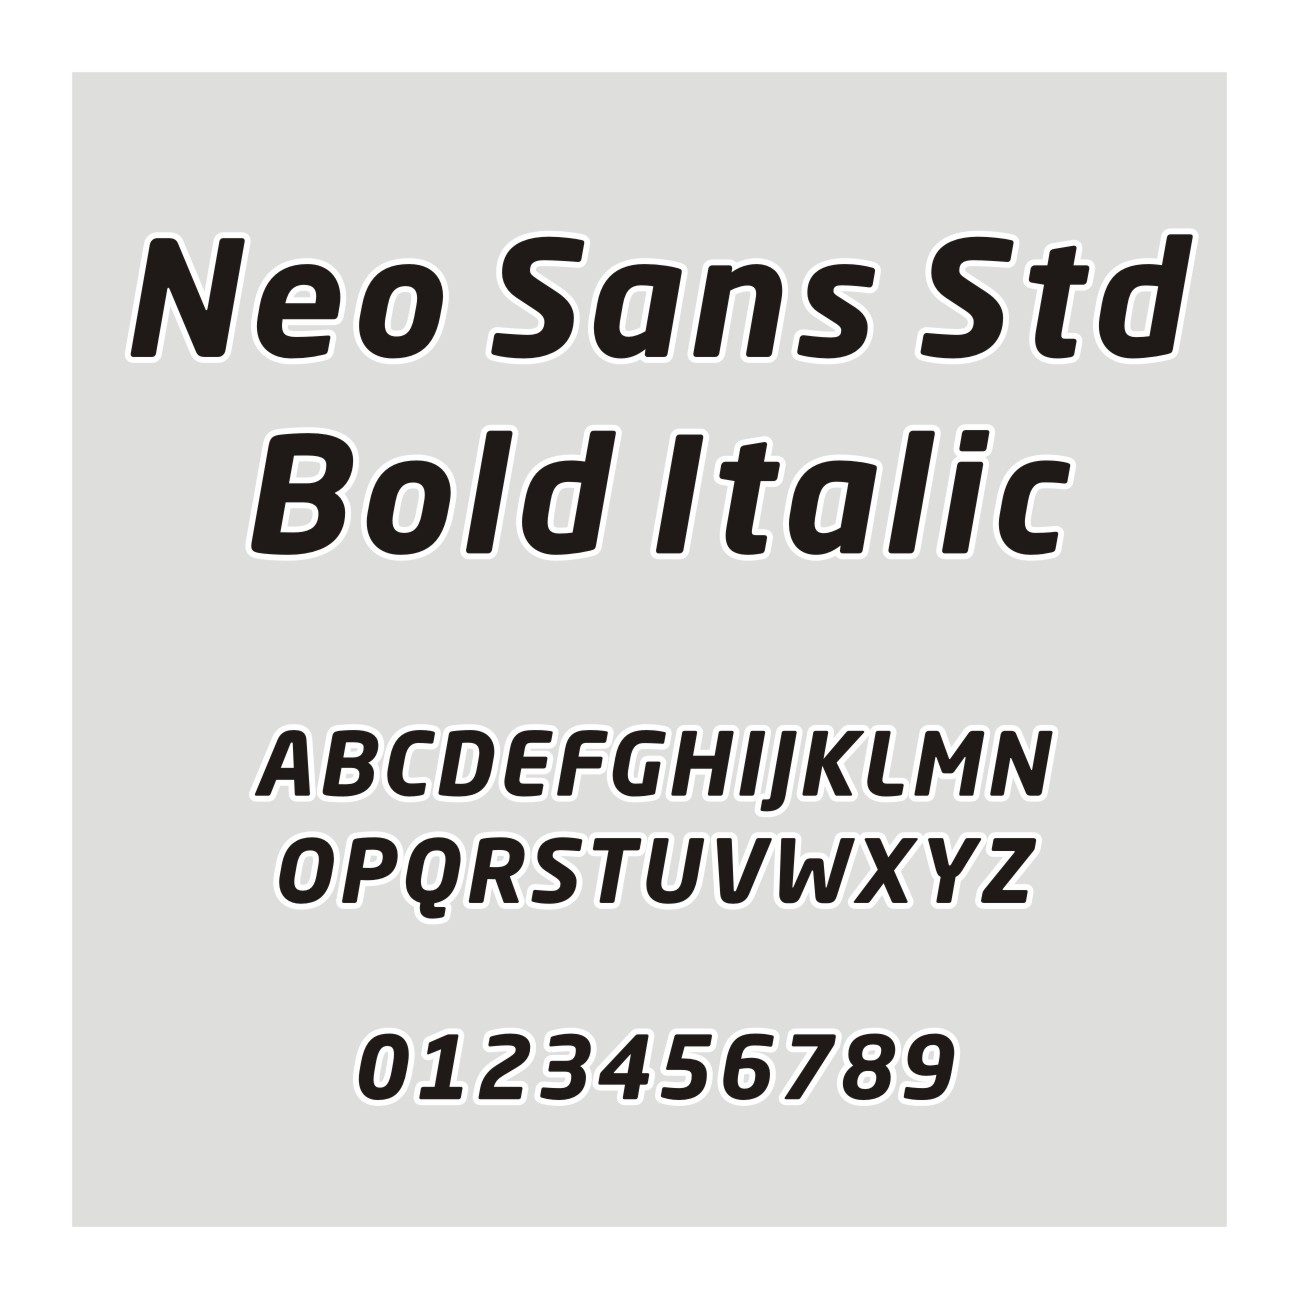 Neo Sans Std Bold Italic